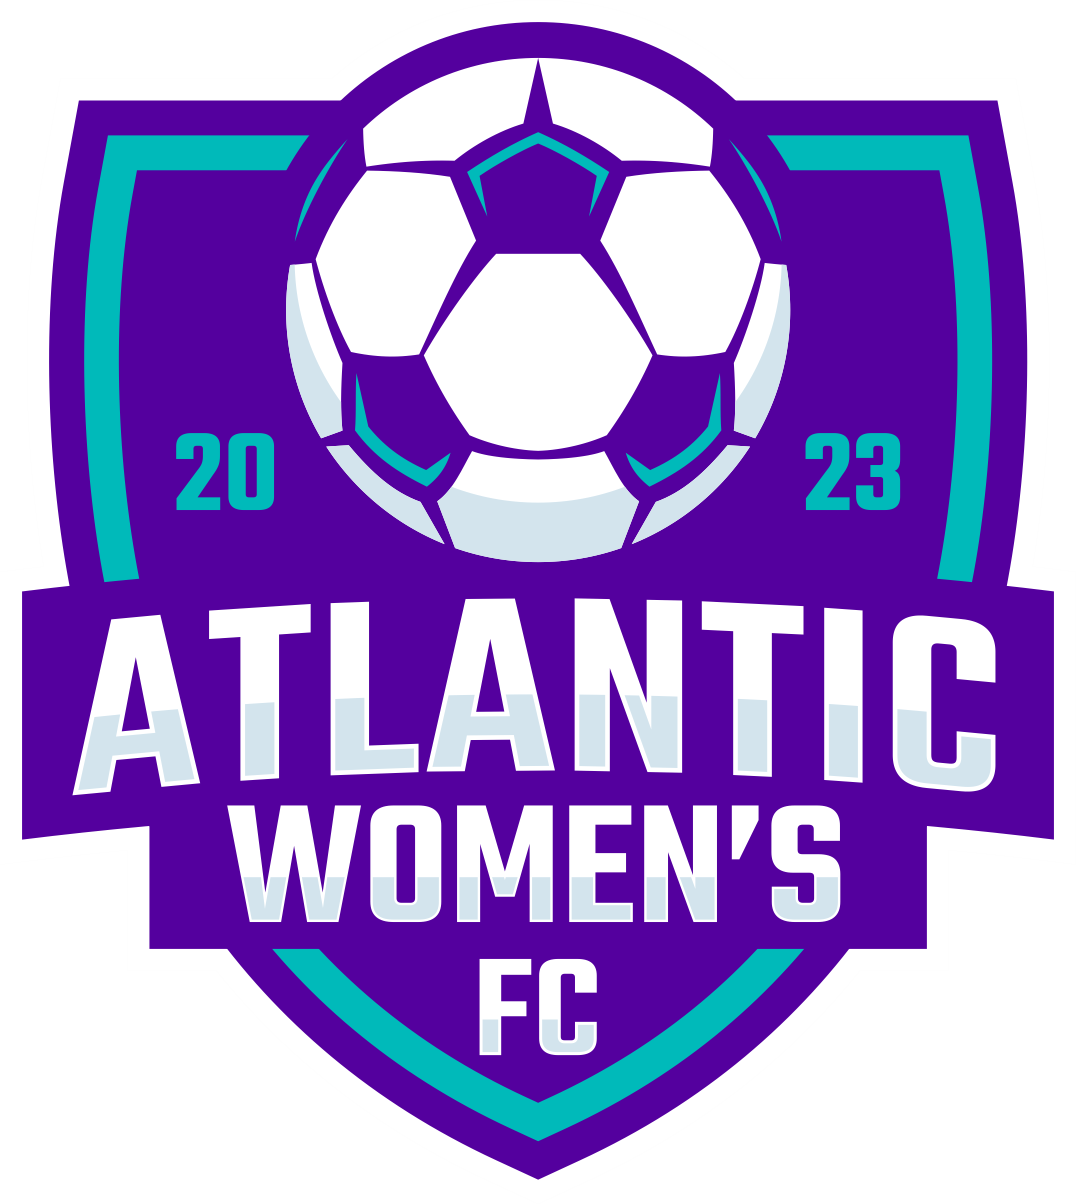 Atlantic Women’s Football Club